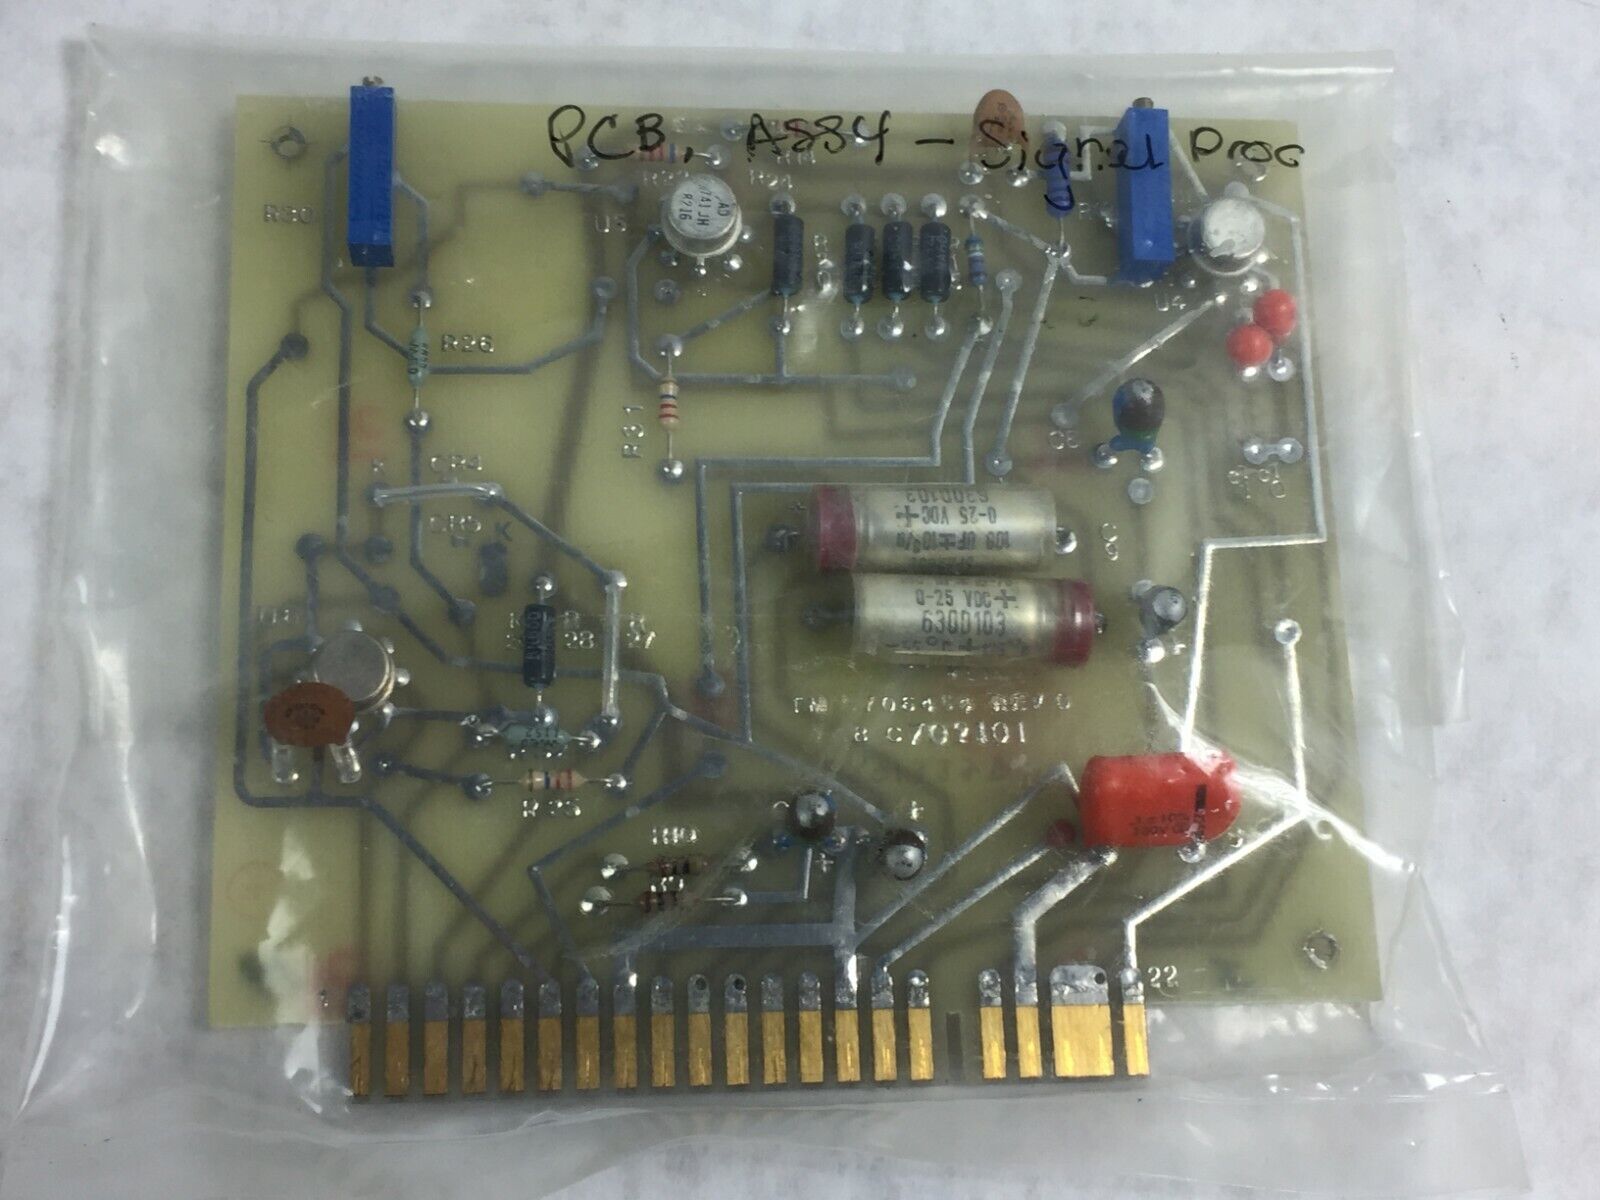 C706454 Rev D PCB Assembly Board Signal Proc   Sealed